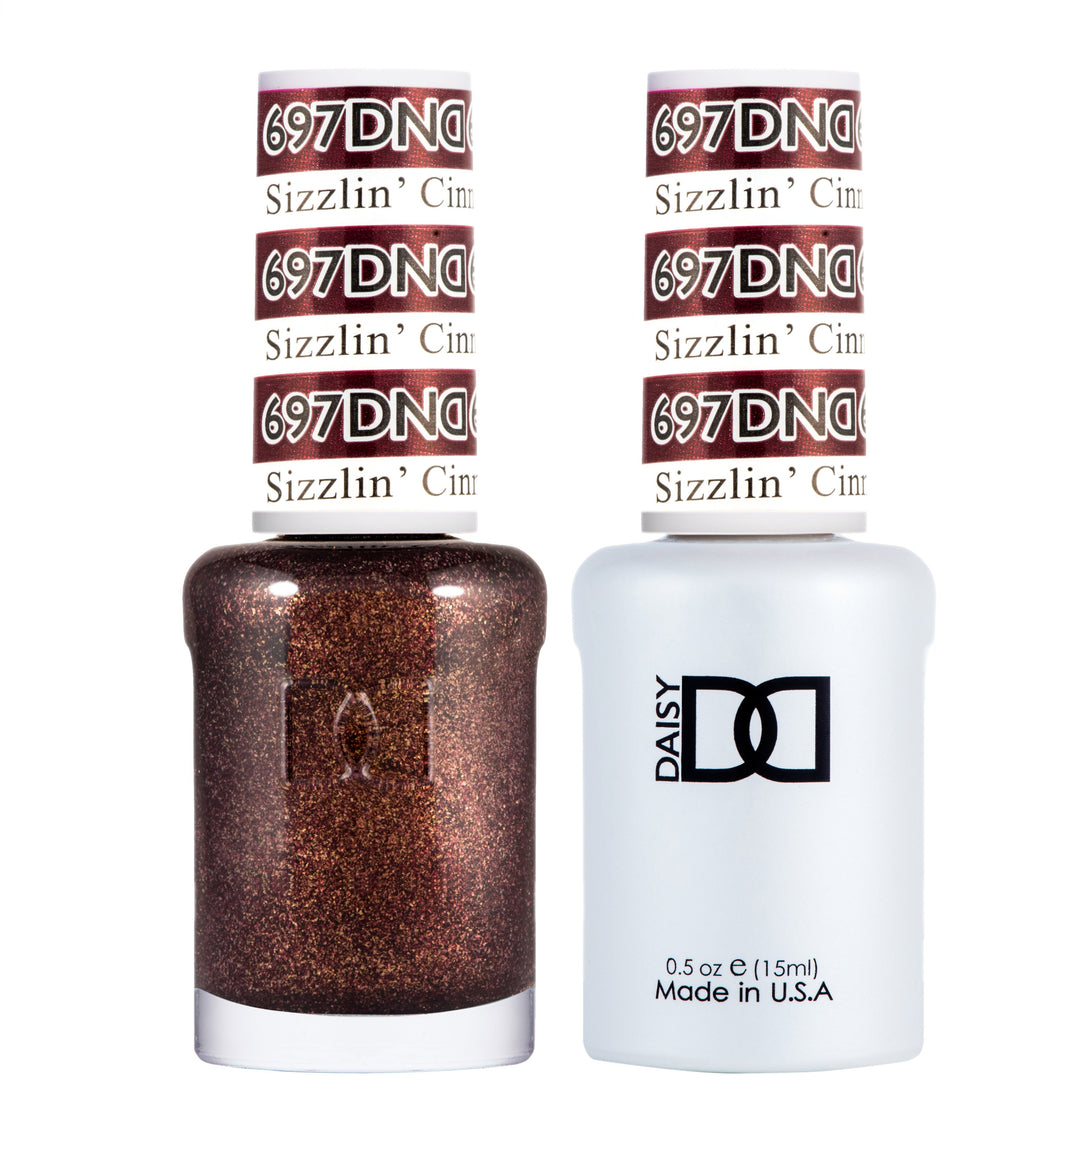 DND DUO Nail Lacquer and UV|LED Gel Polish Sizzlin Cinnamon 697 (2 x 15ml)